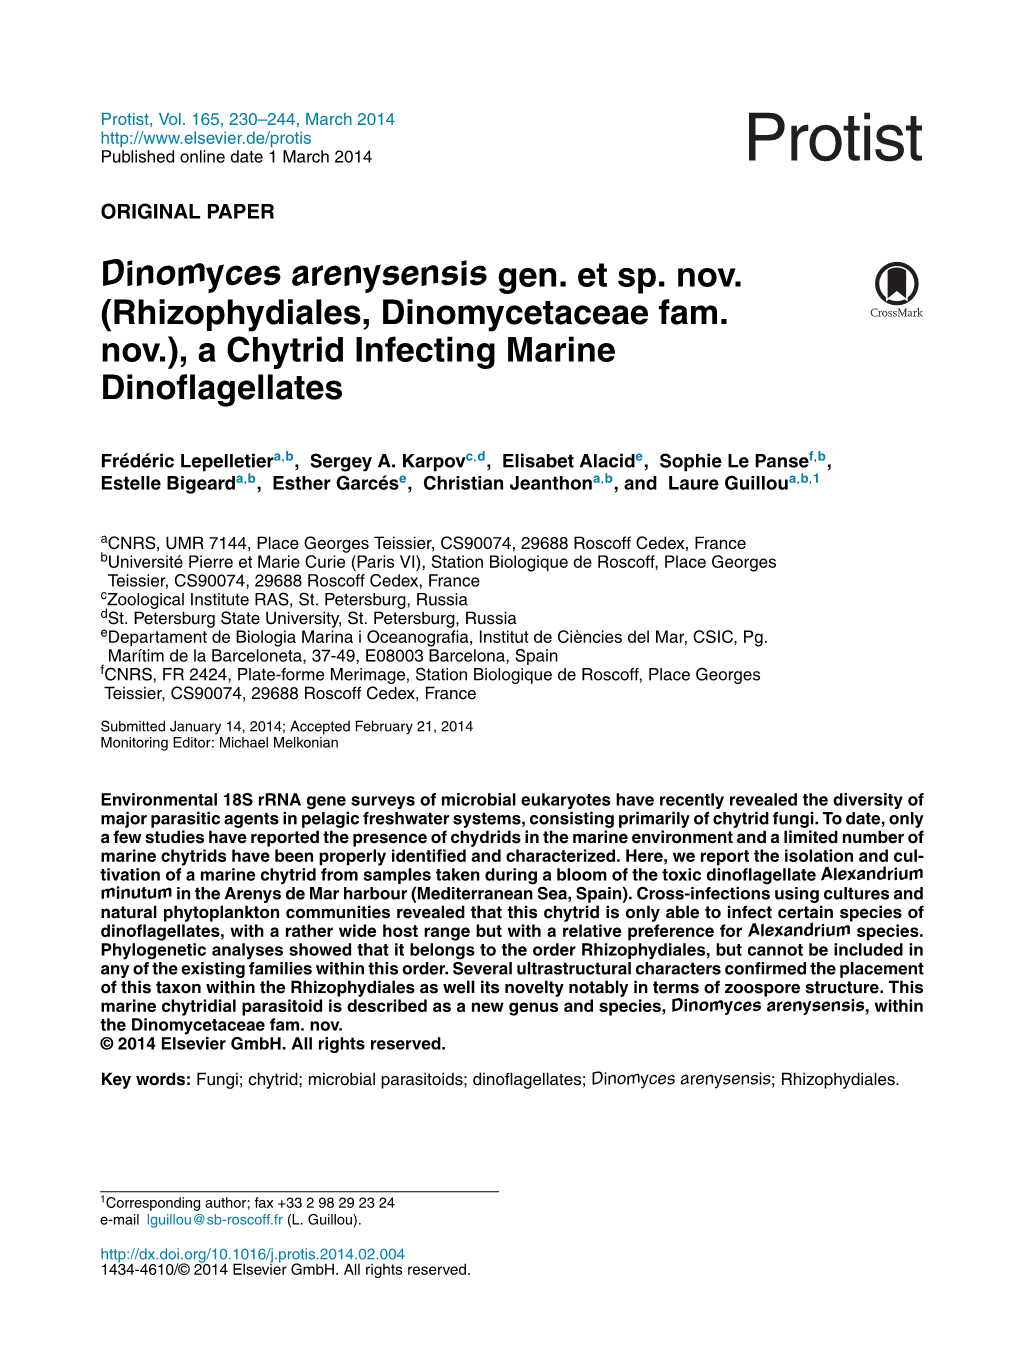 Lepelletier Et Al 2014 Dinomyces Arenysensis Gen.Pdf